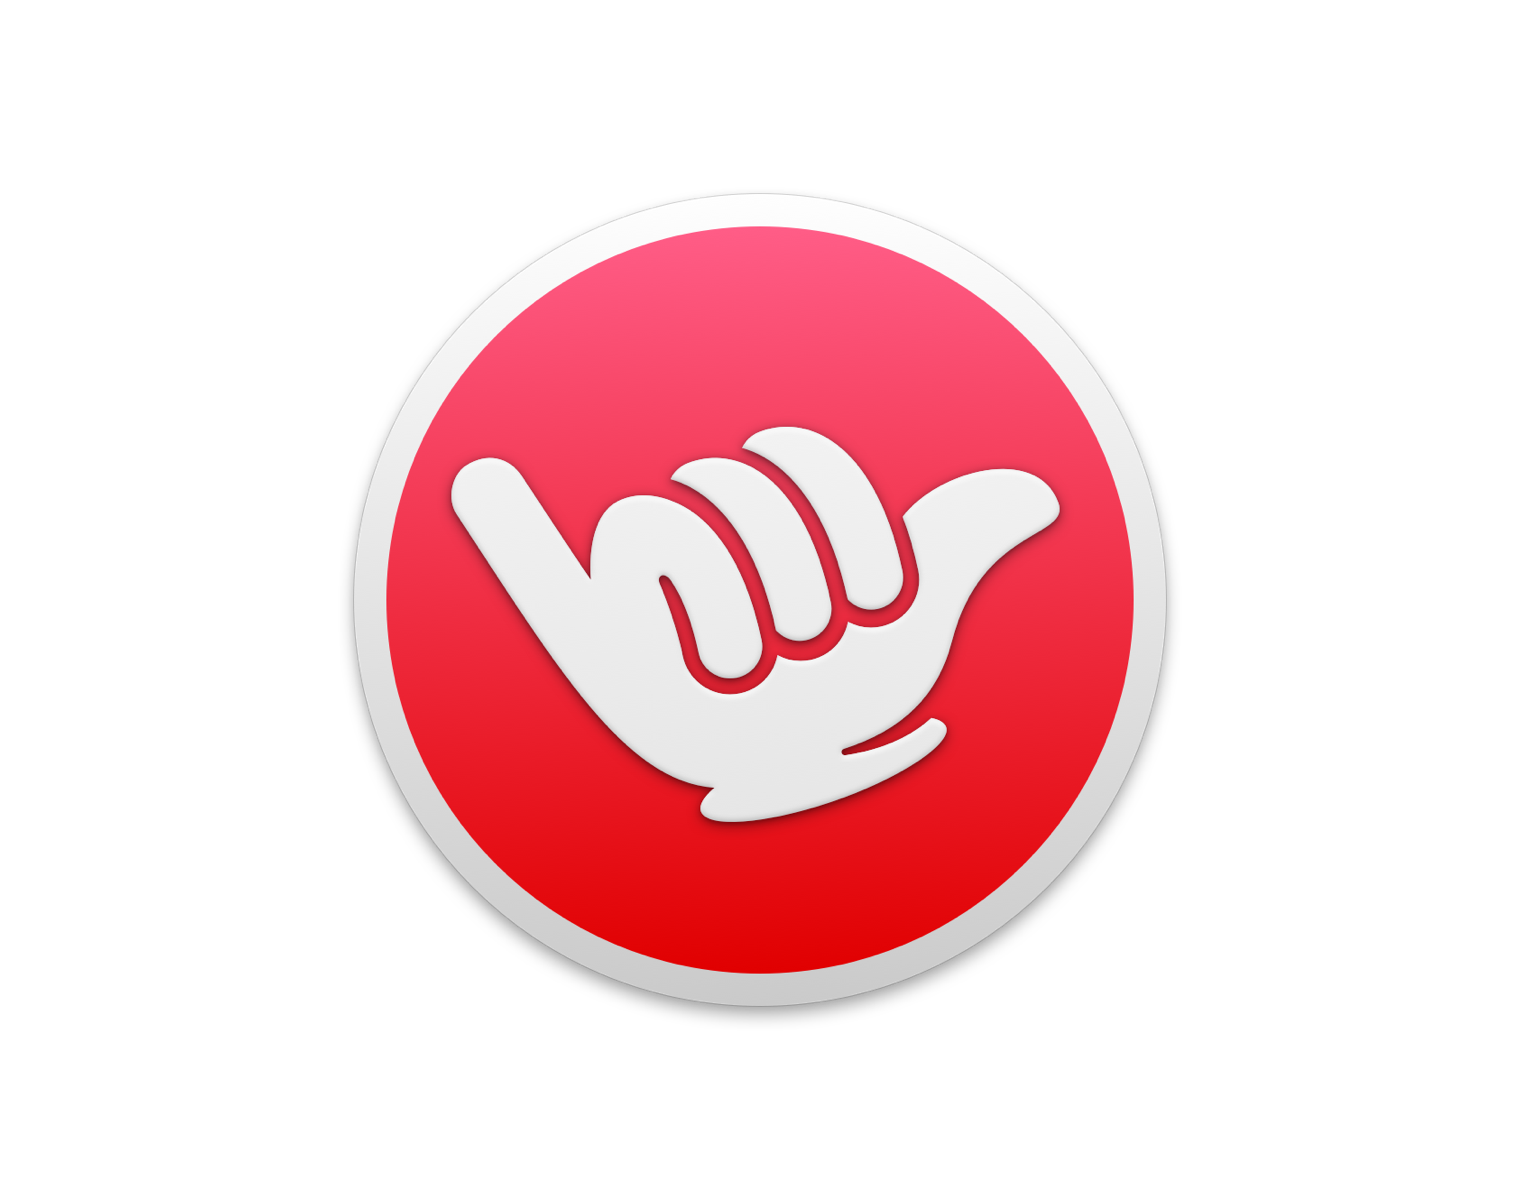 RadBlock.app app icon